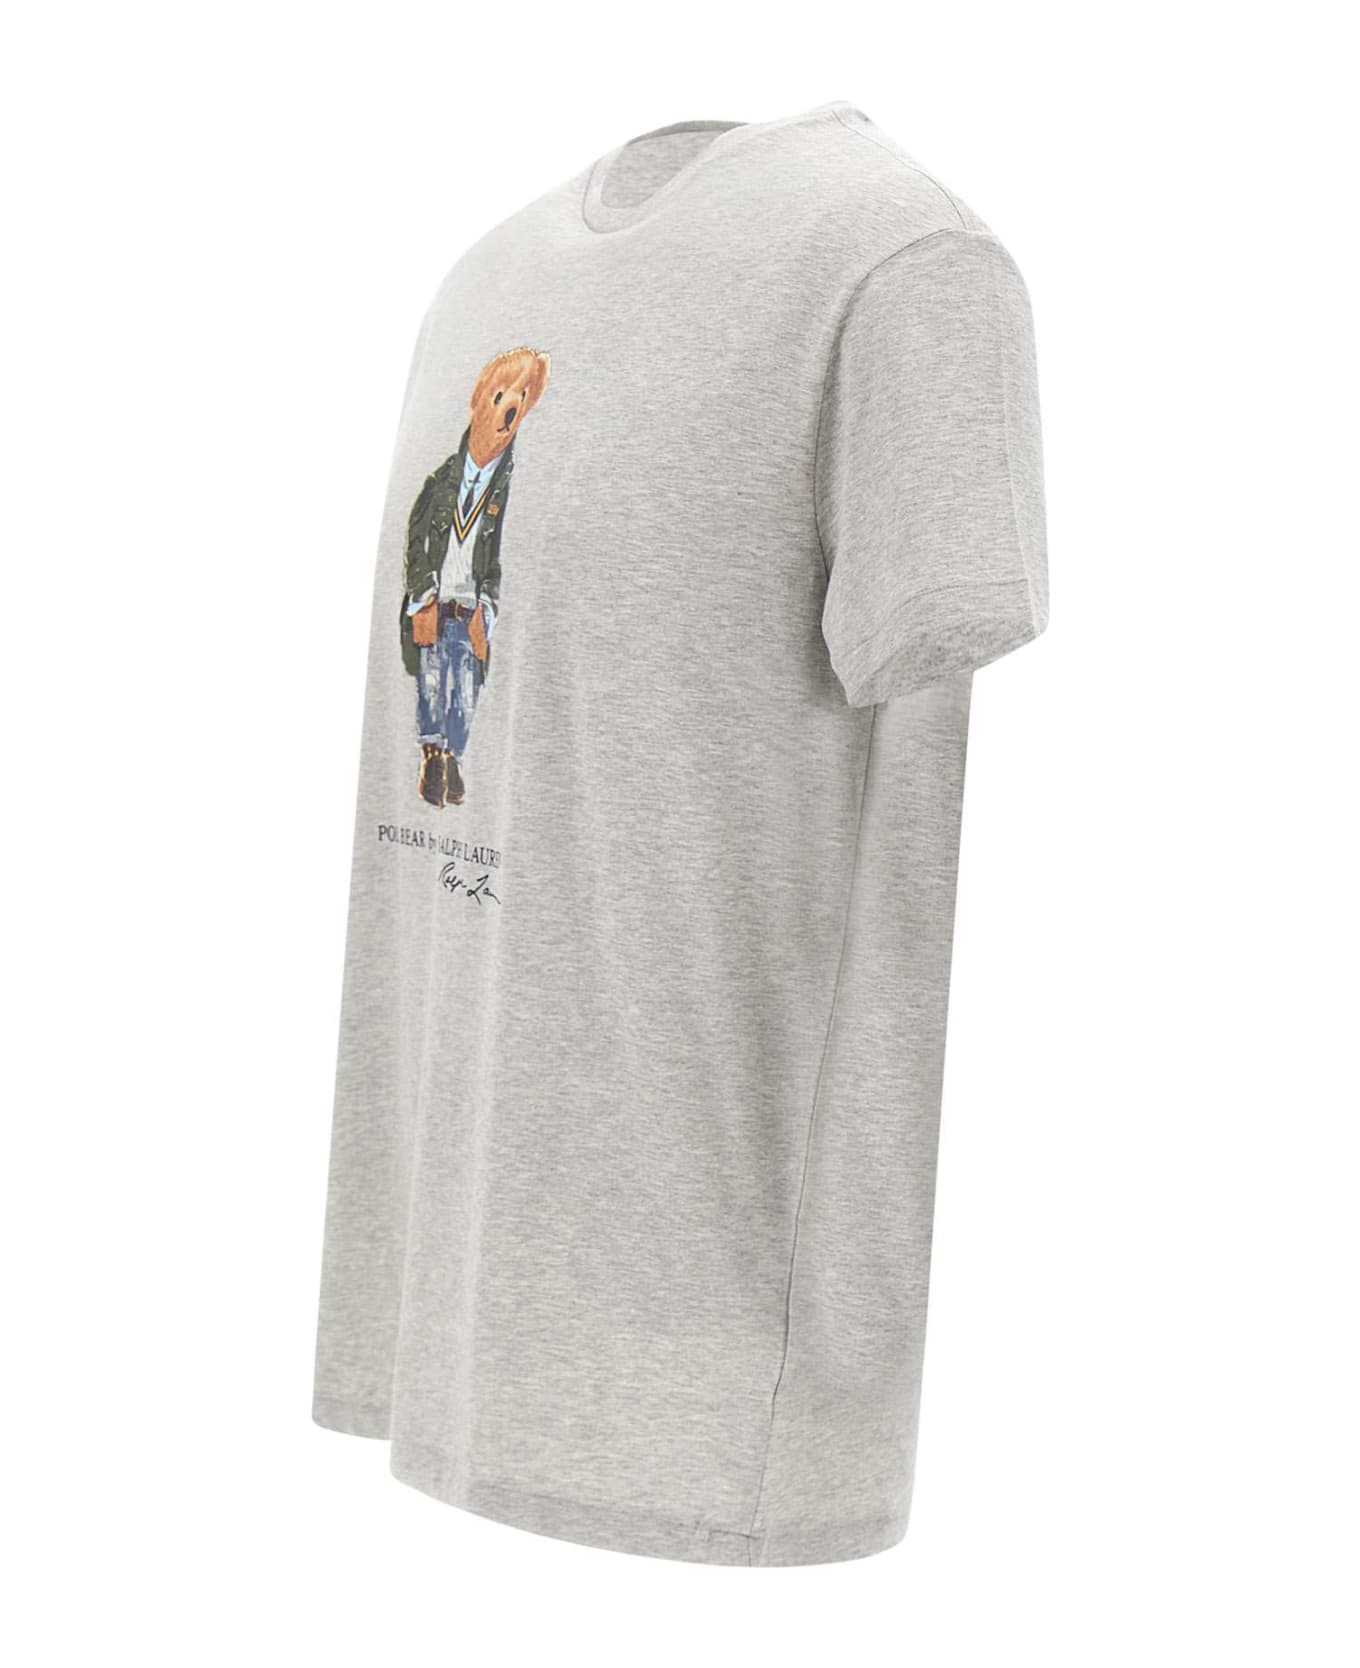 Polo Ralph Lauren "classics" Cotton T-shirt - GREY